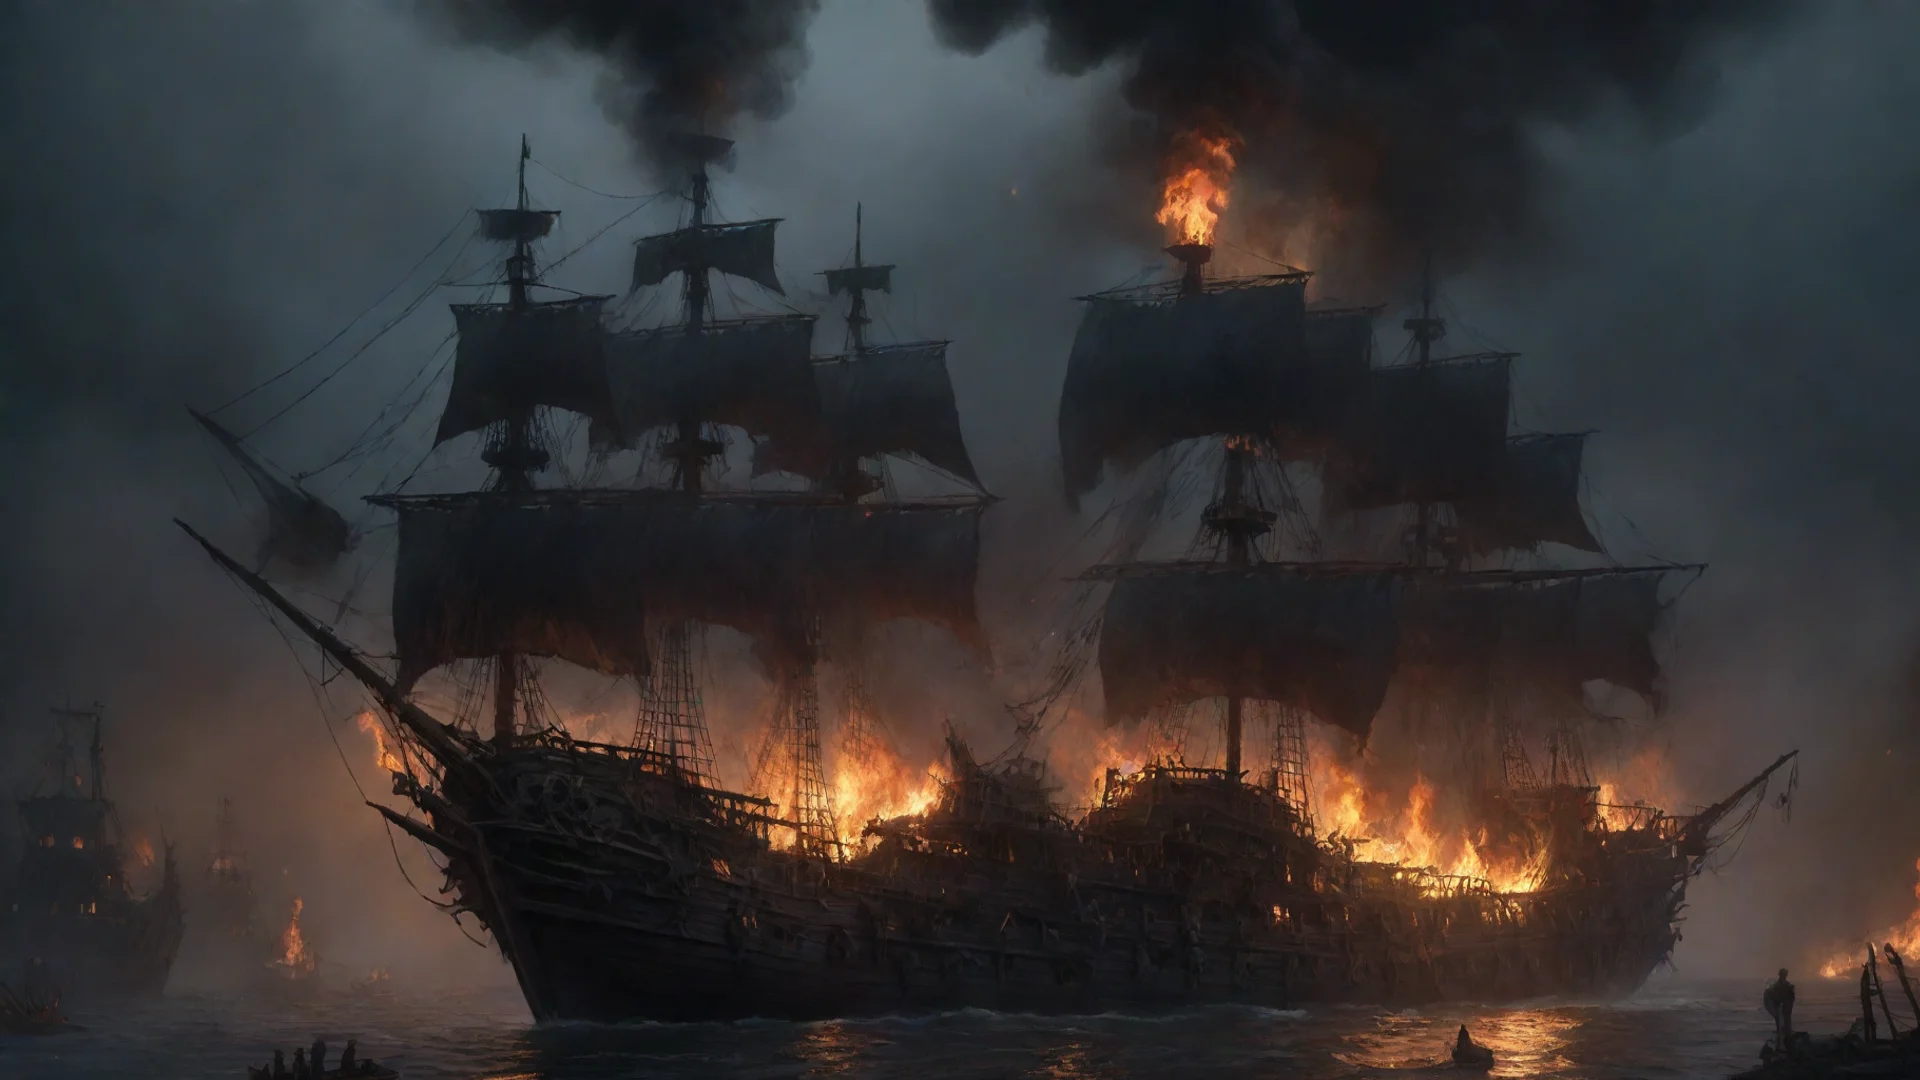 aiburning pirate ship concept art dark smoldering skeletons wide